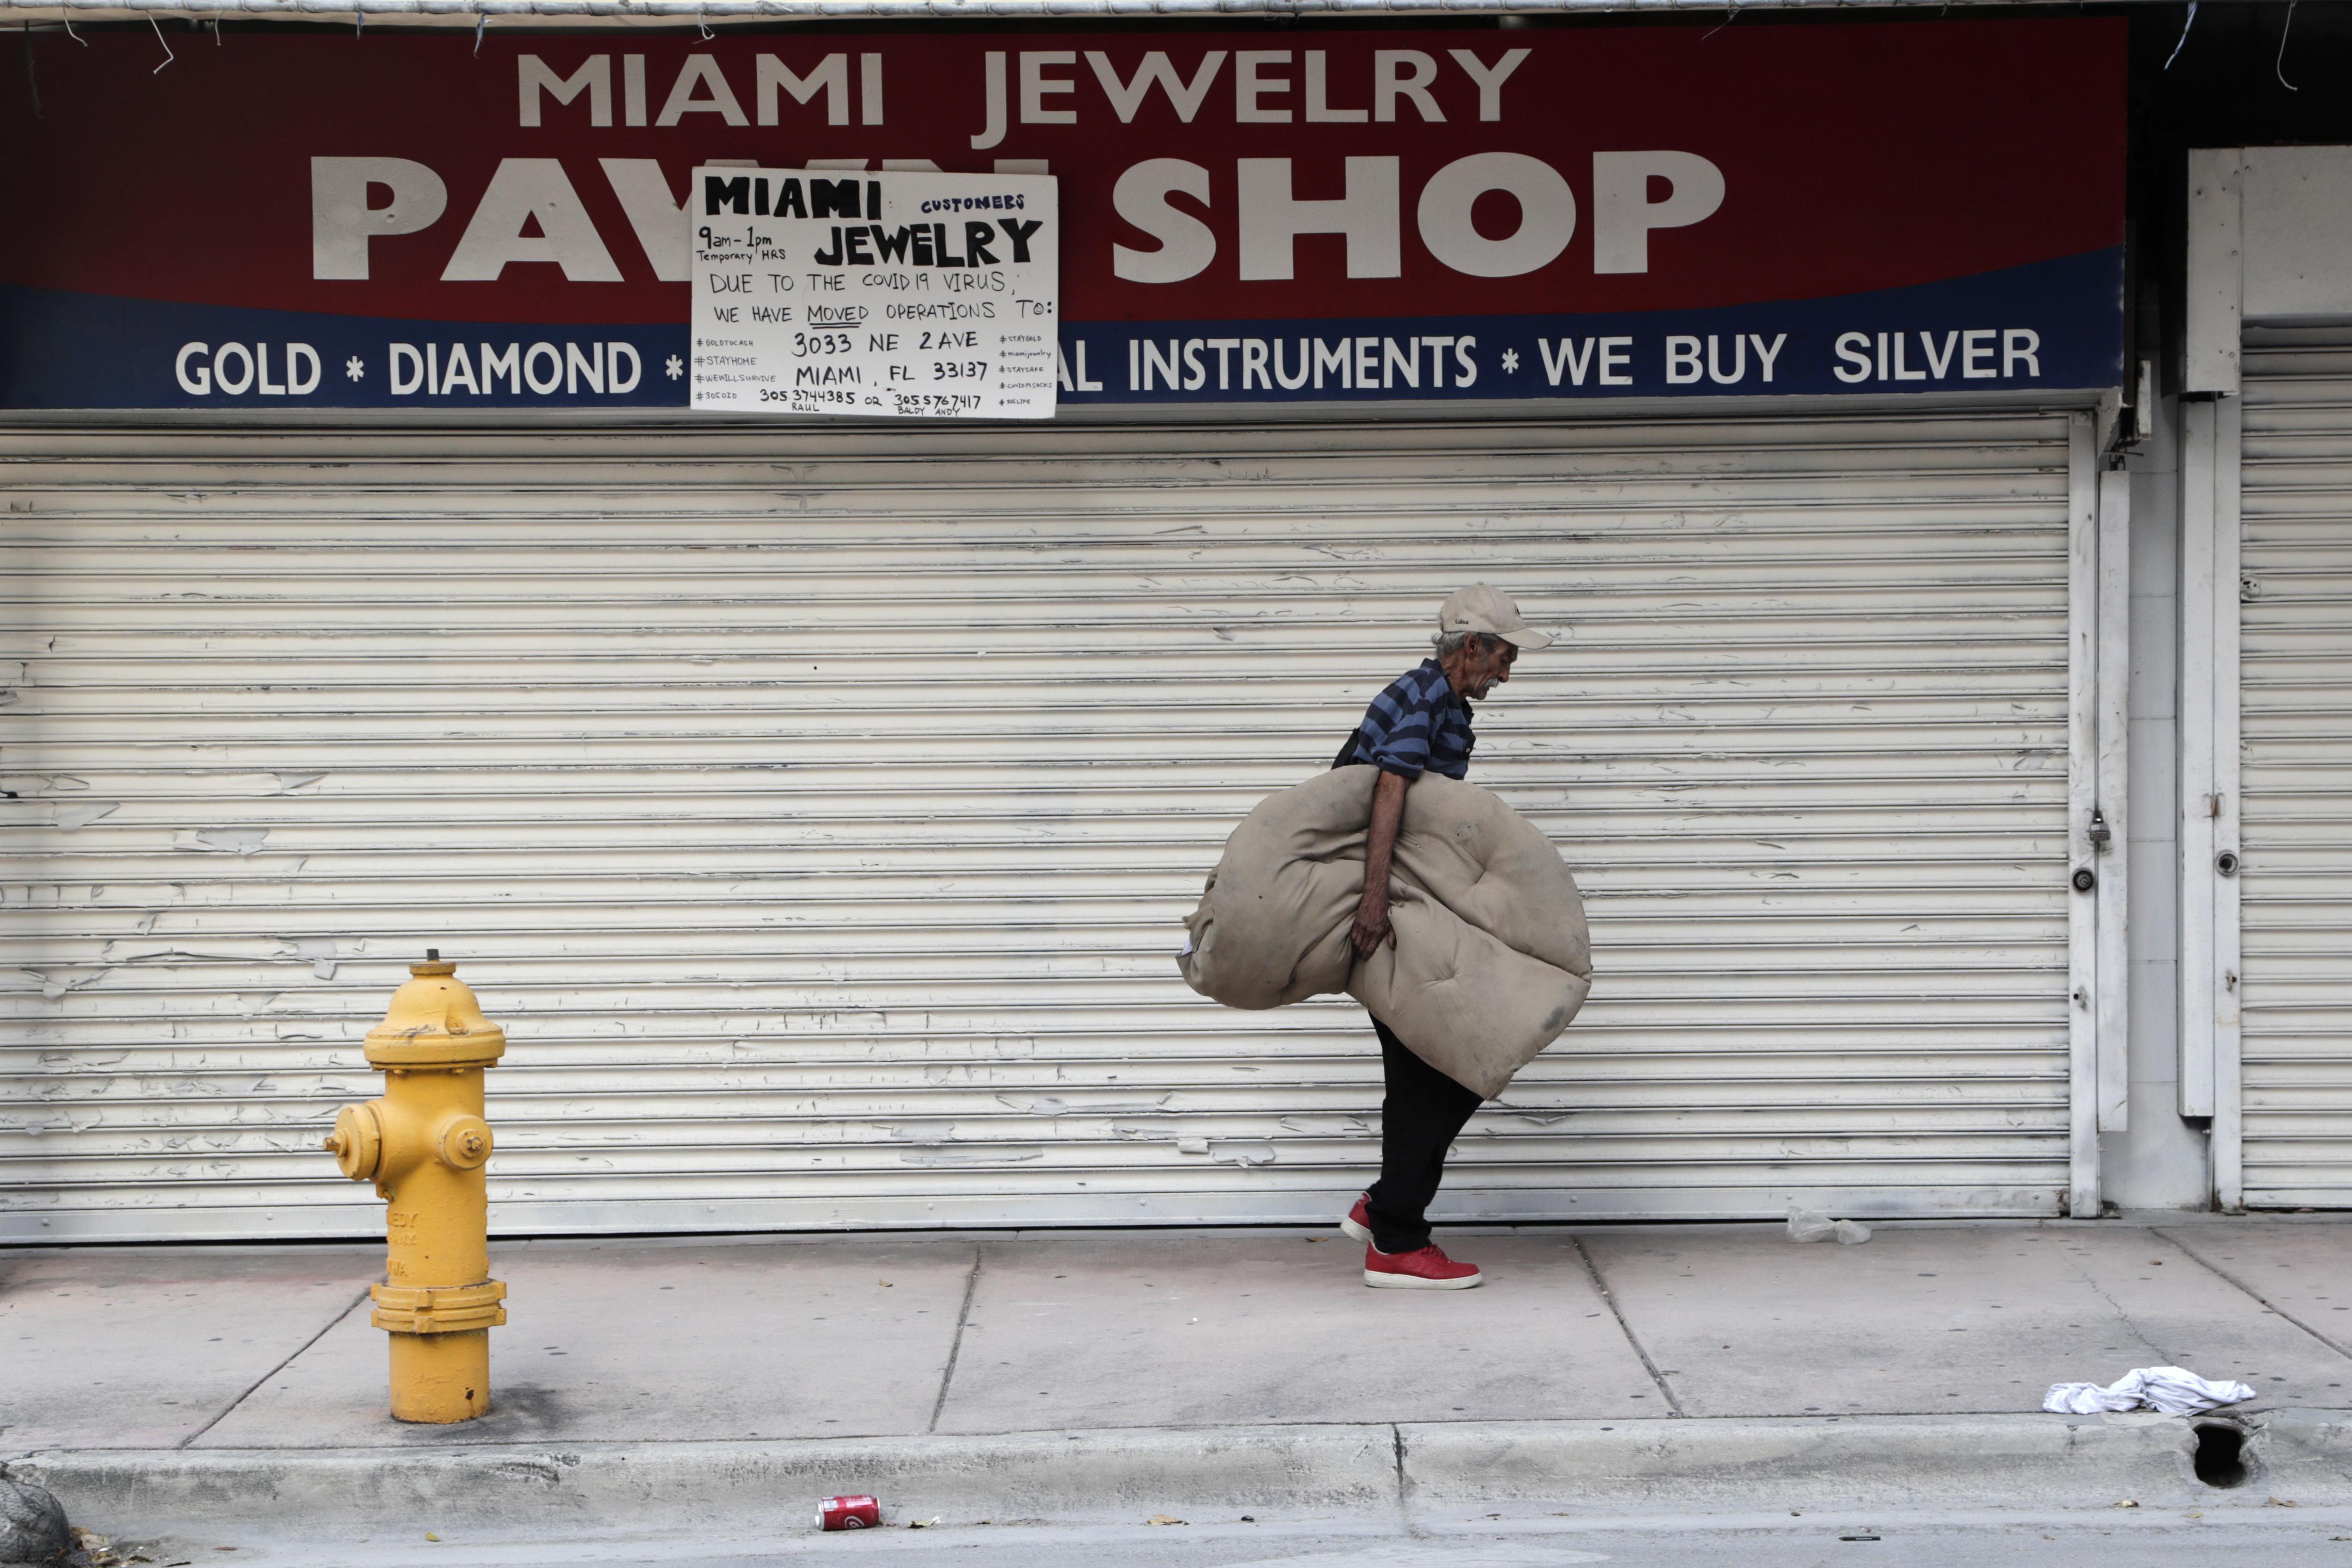 Jewelry Store in Miami - 39th St